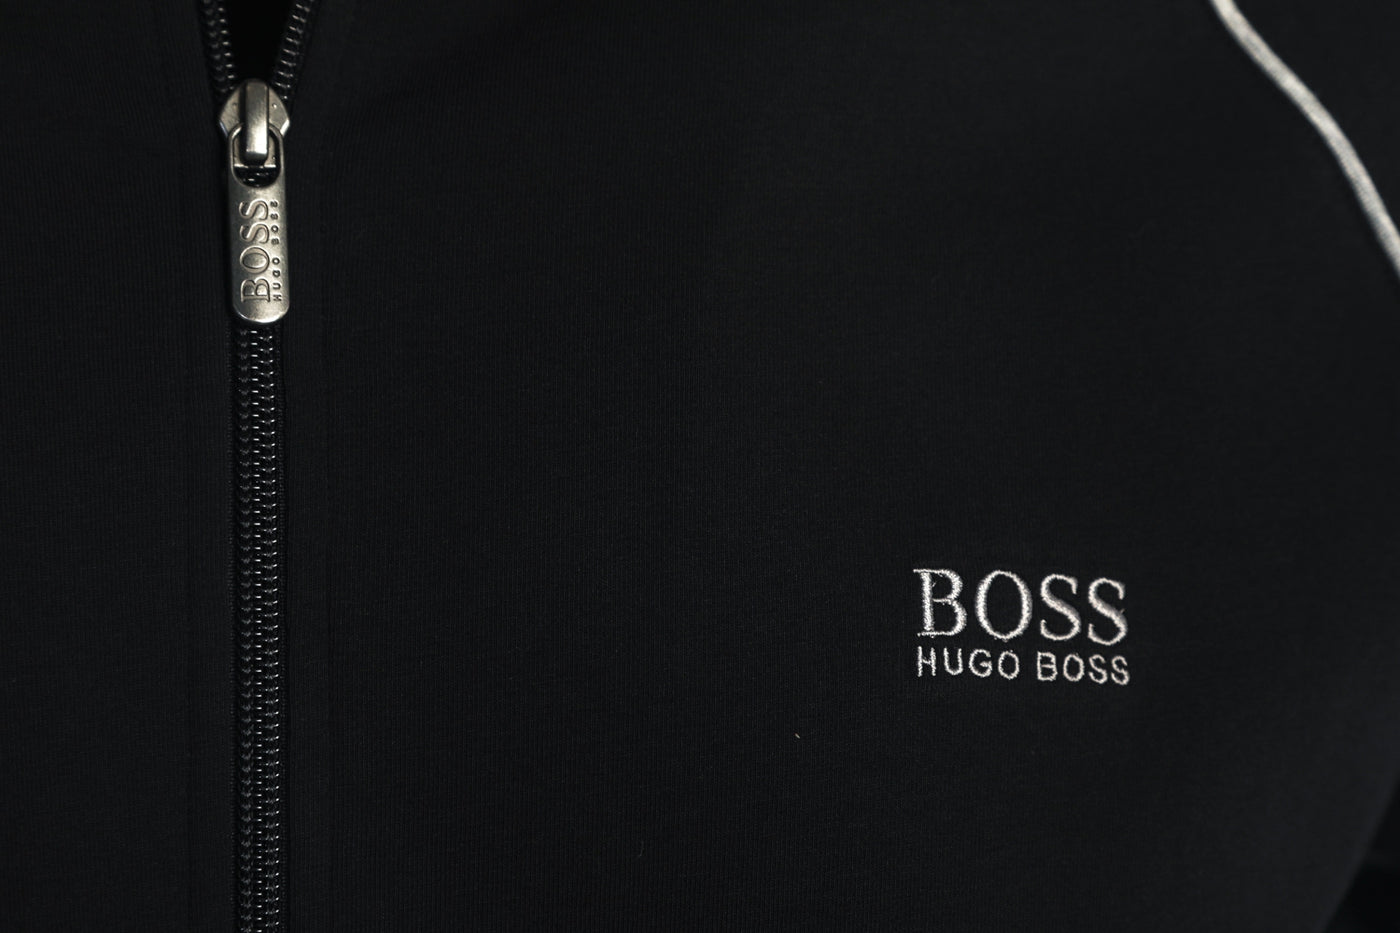 BOSS Mix & Match Jacket Z Sweat Top in Black & Grey